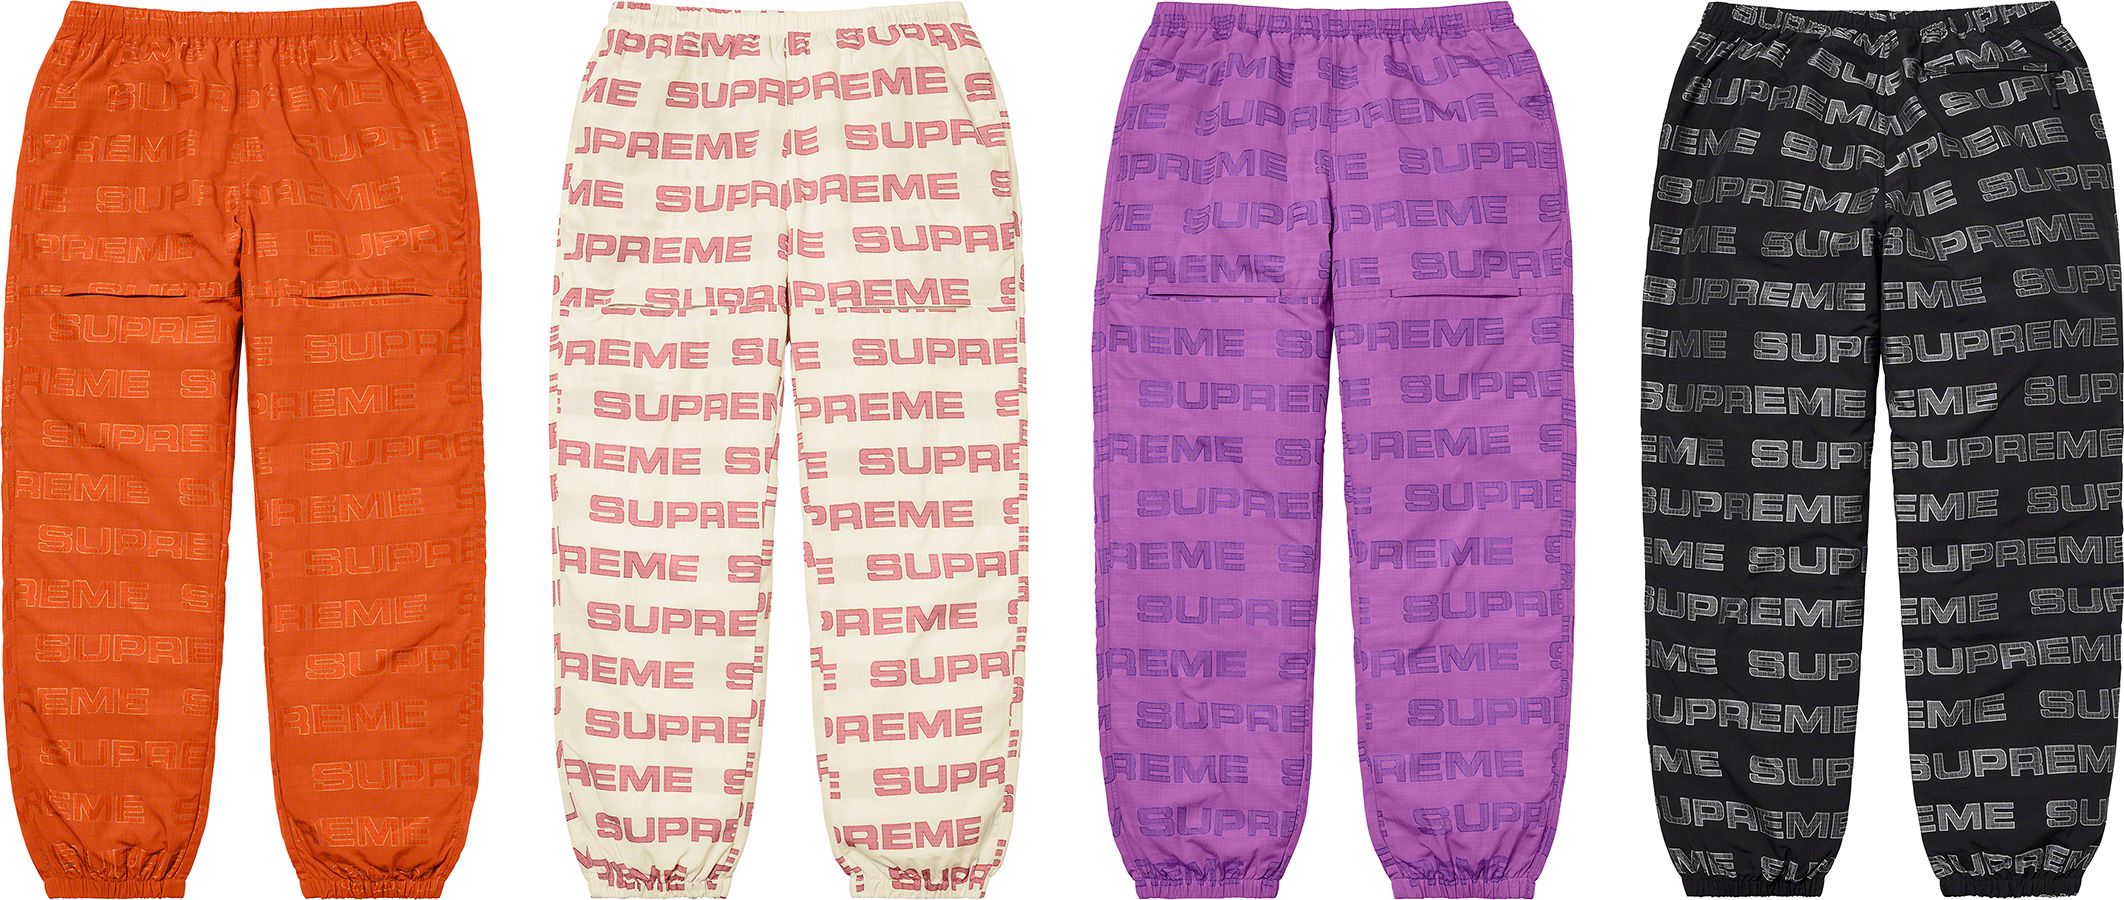 Supreme 2017 Fall/Winter Pants